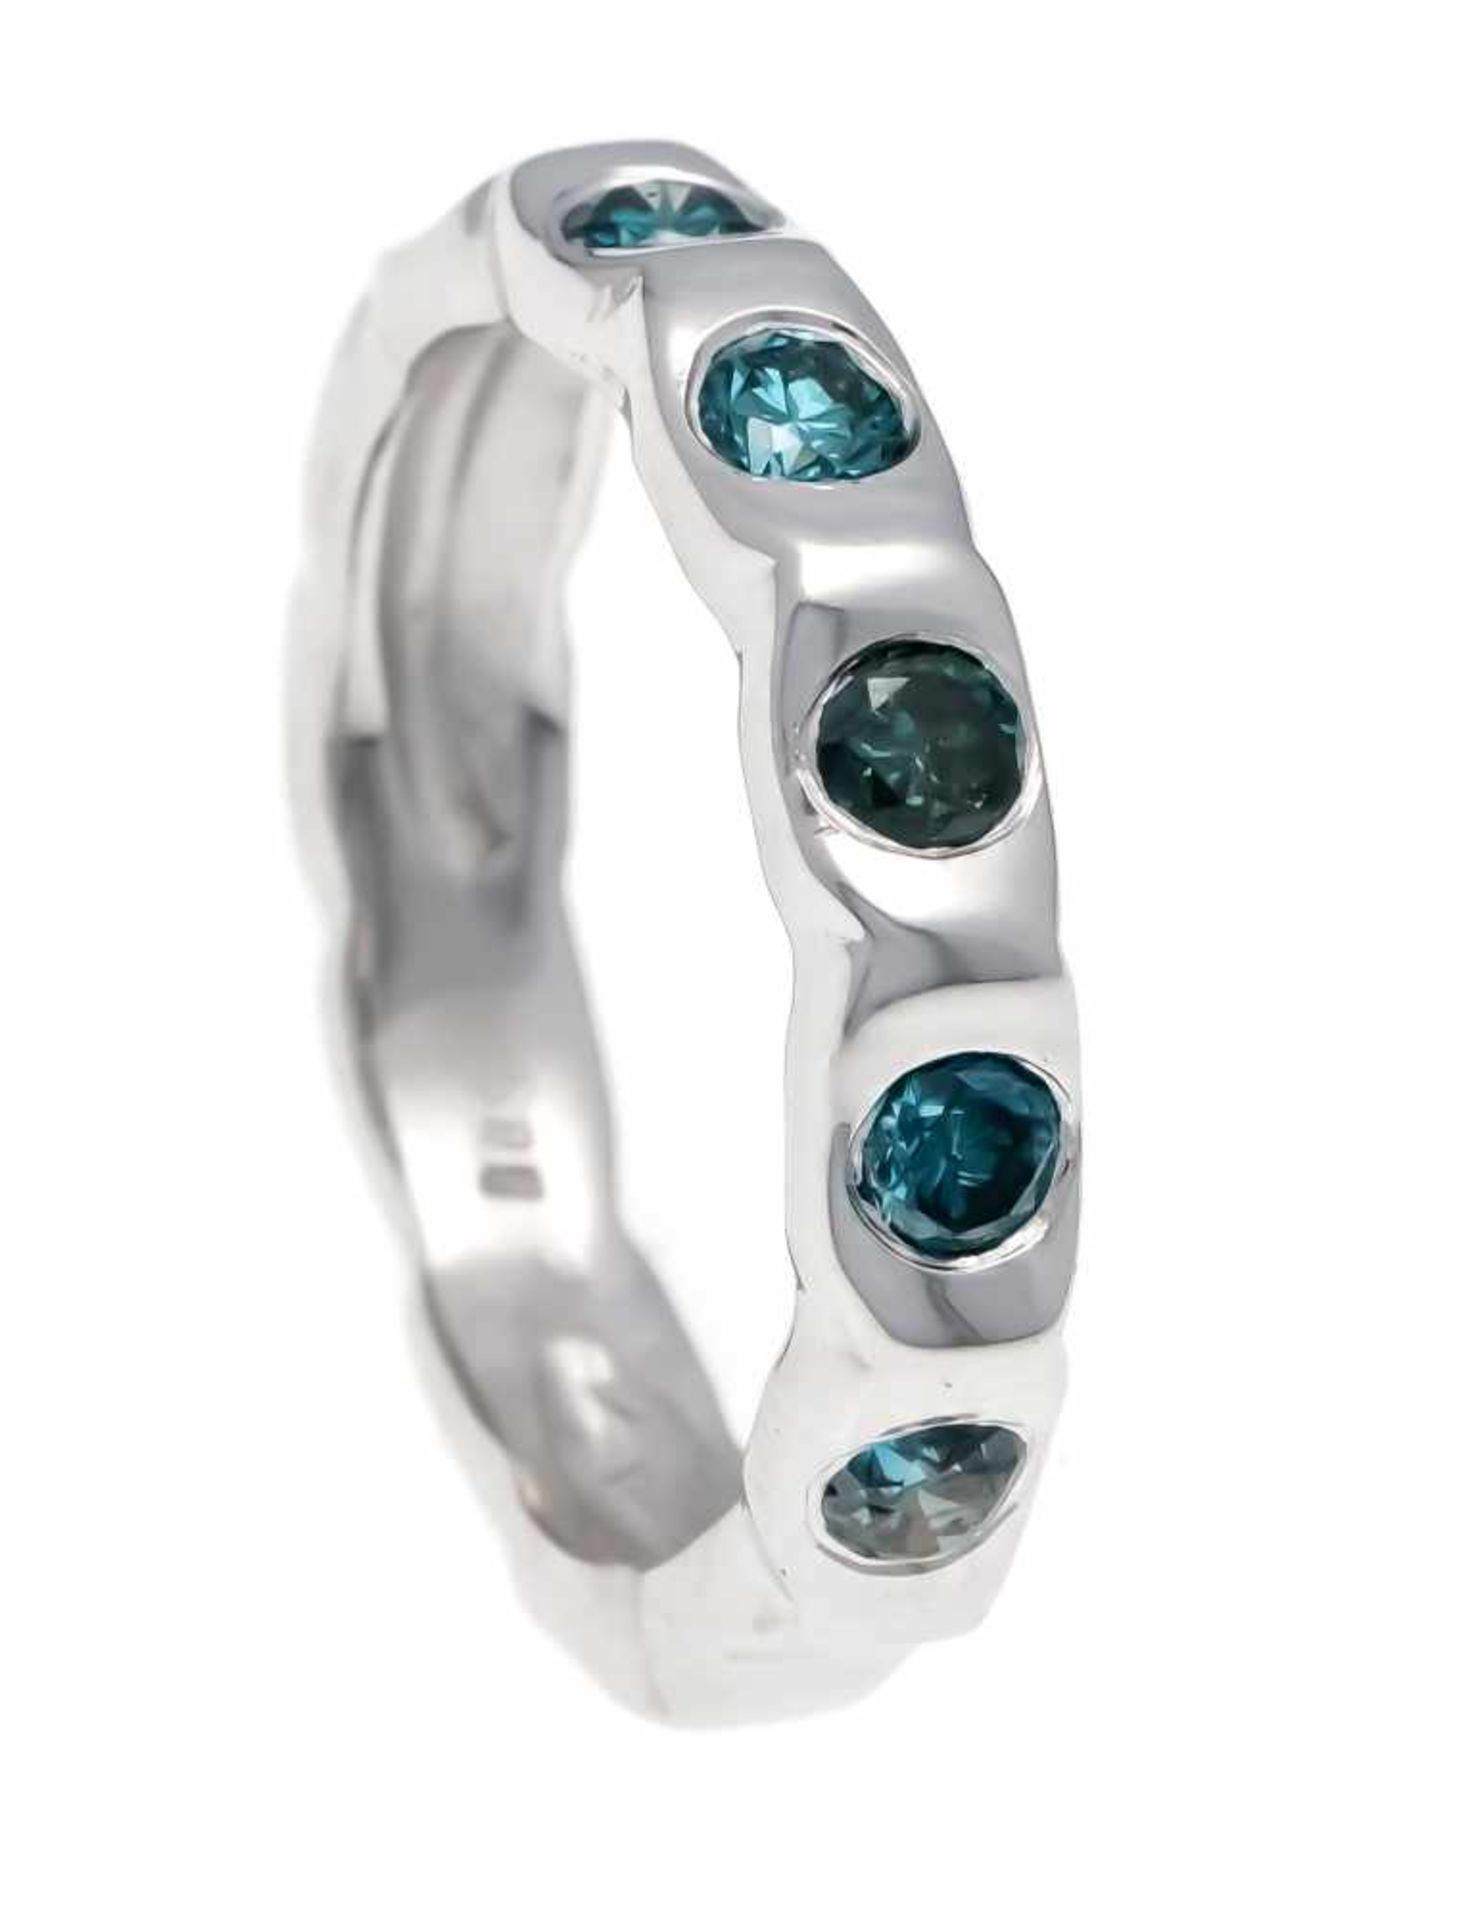 Brillant-Ring WG 585/000 mit 5 Brillanten, zus. 0,90 ct fancy-ocean-Blue/SI-PI, RG 54, 4,5